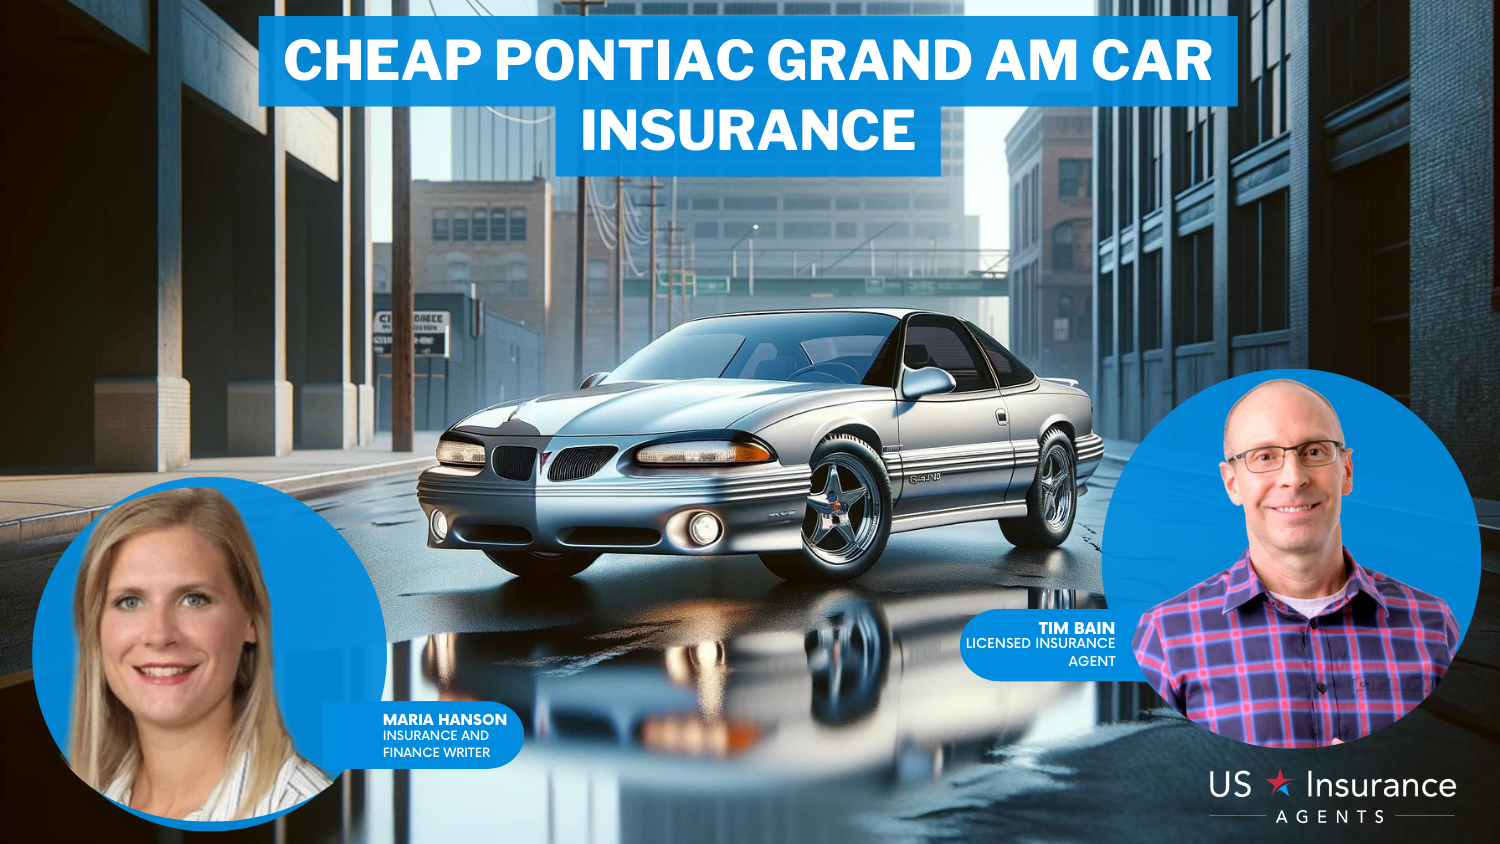 State Farm, Progressive and Allstate: Cheap Pontiac Grand Am Car Insurance